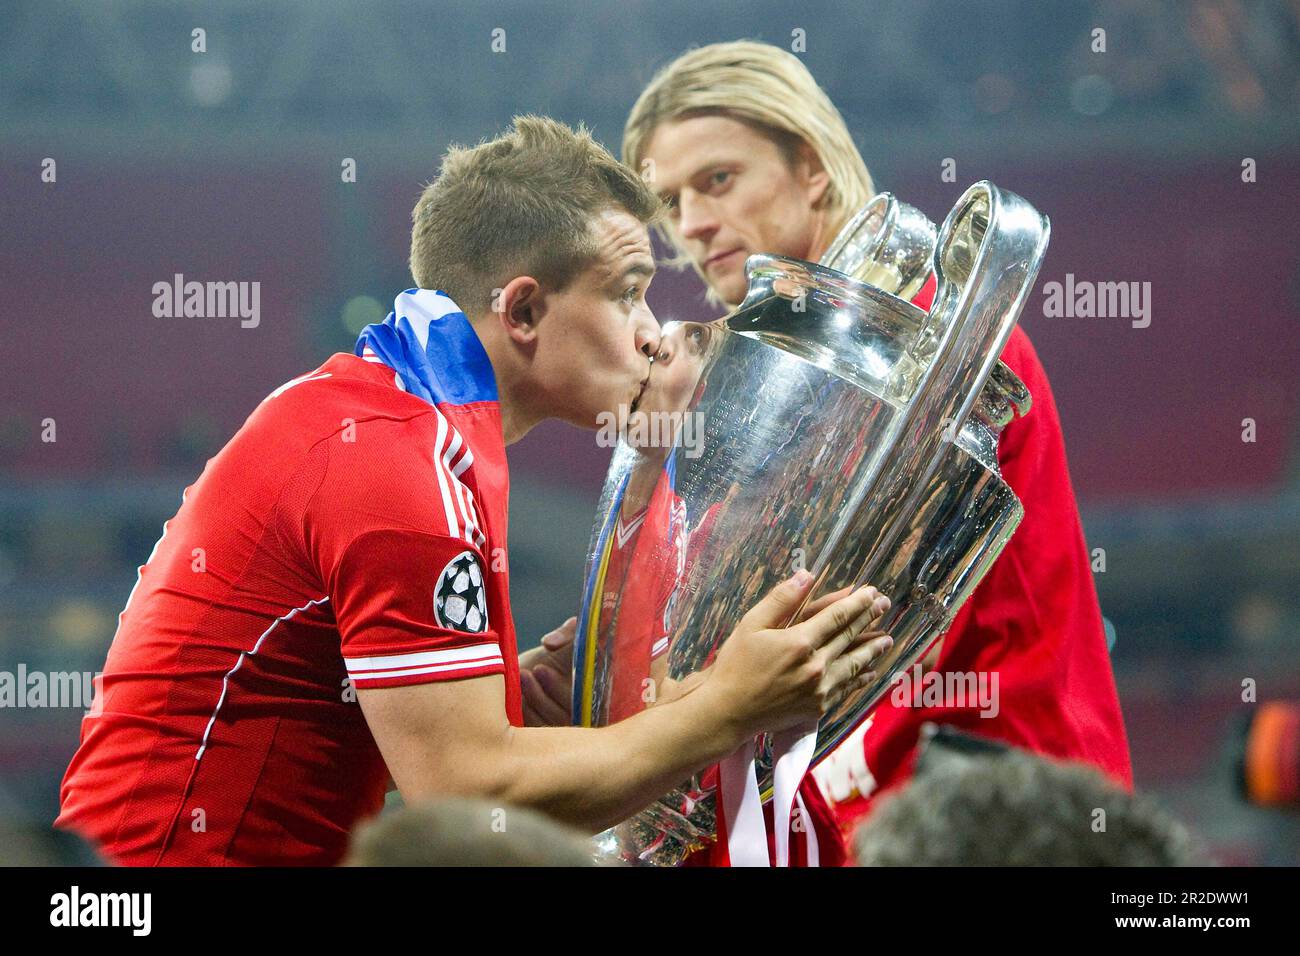 ARCHIVE PHOTO: 10 years ago, on May 25, 2013, FC Bayern Munich won the UEFA Champions League, Xherdan SHAQIRI (left, M) kisses the trophy, Anatoliy TYMOSHCHUK (M) watches, Soccer Champions League Final 2013/Borussia Dortmund (DO) - FC Bayern Munich (M) 1:2. SEASON 2012/13, WEMBLEY STADIUM, 25/05/2013. ? Stock Photo